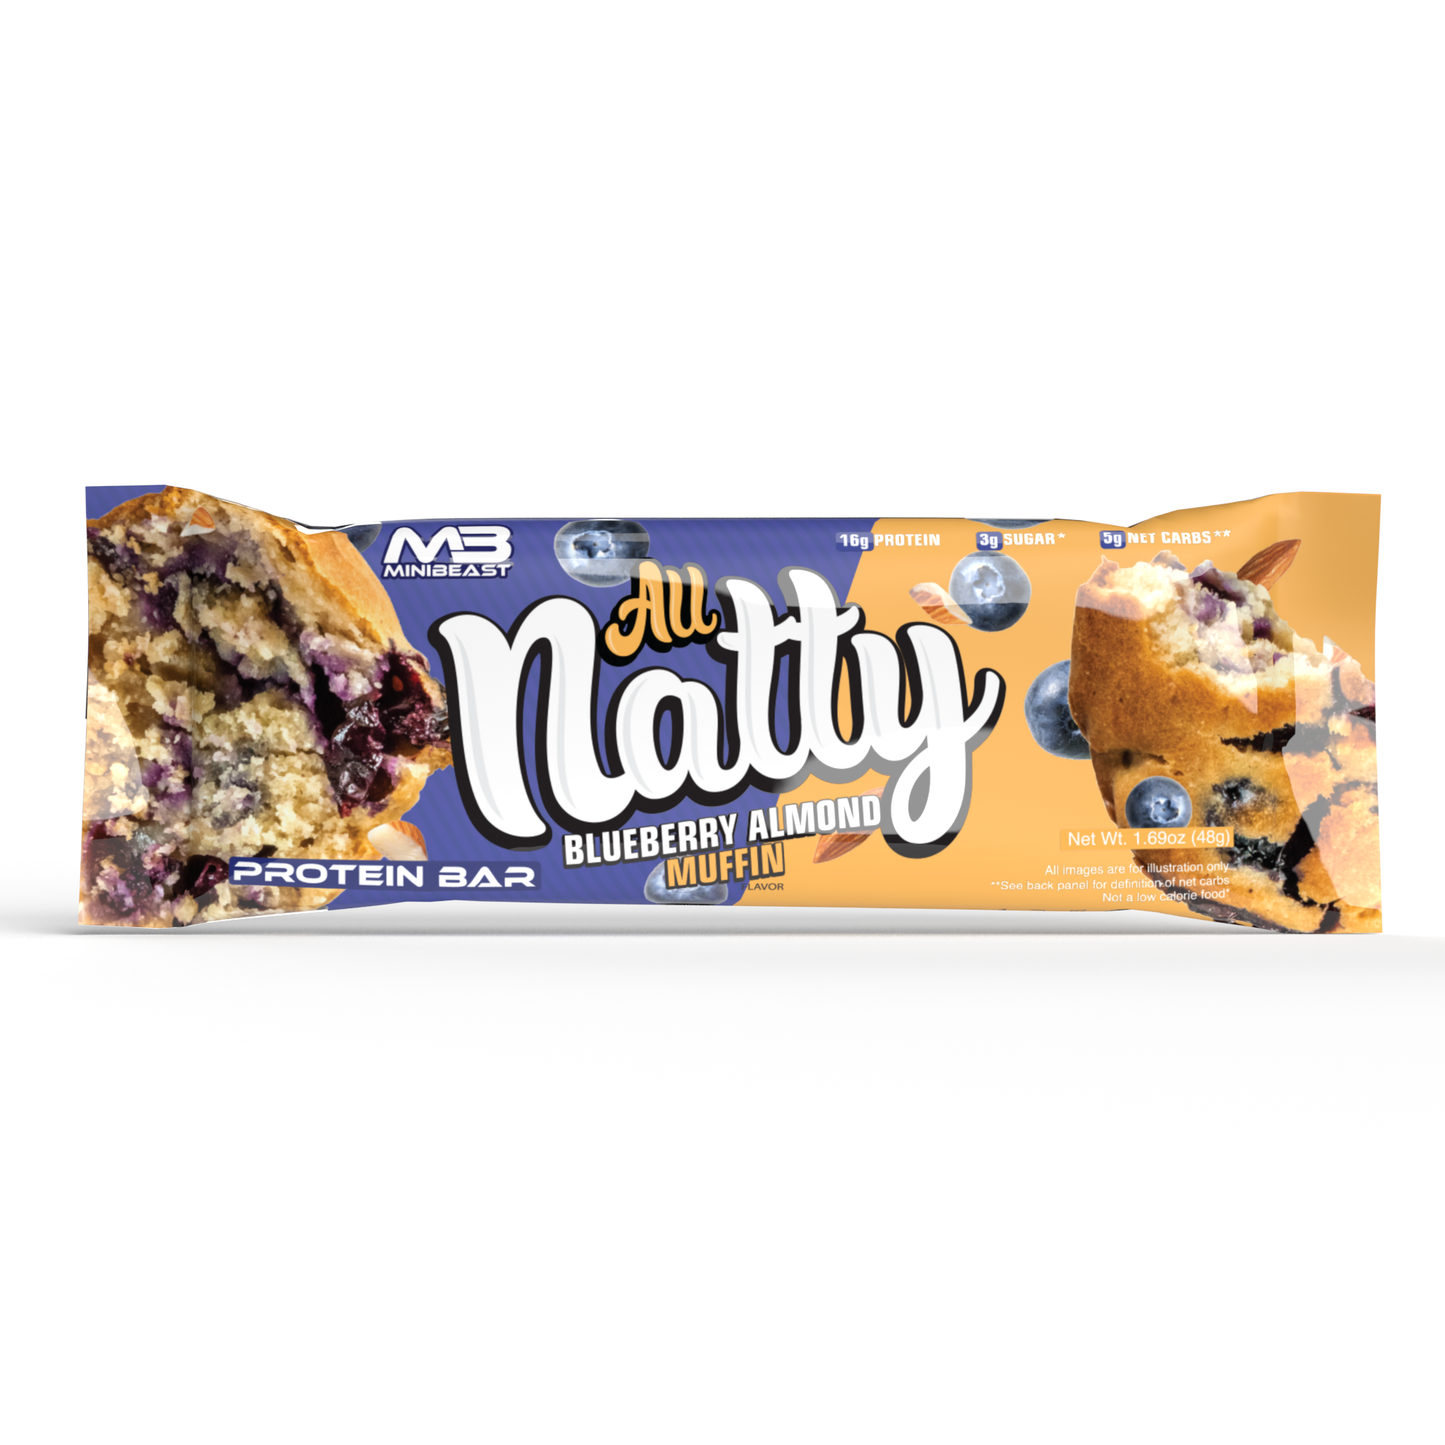 All Natty Protein Bar - Blueberry Almond Muffin